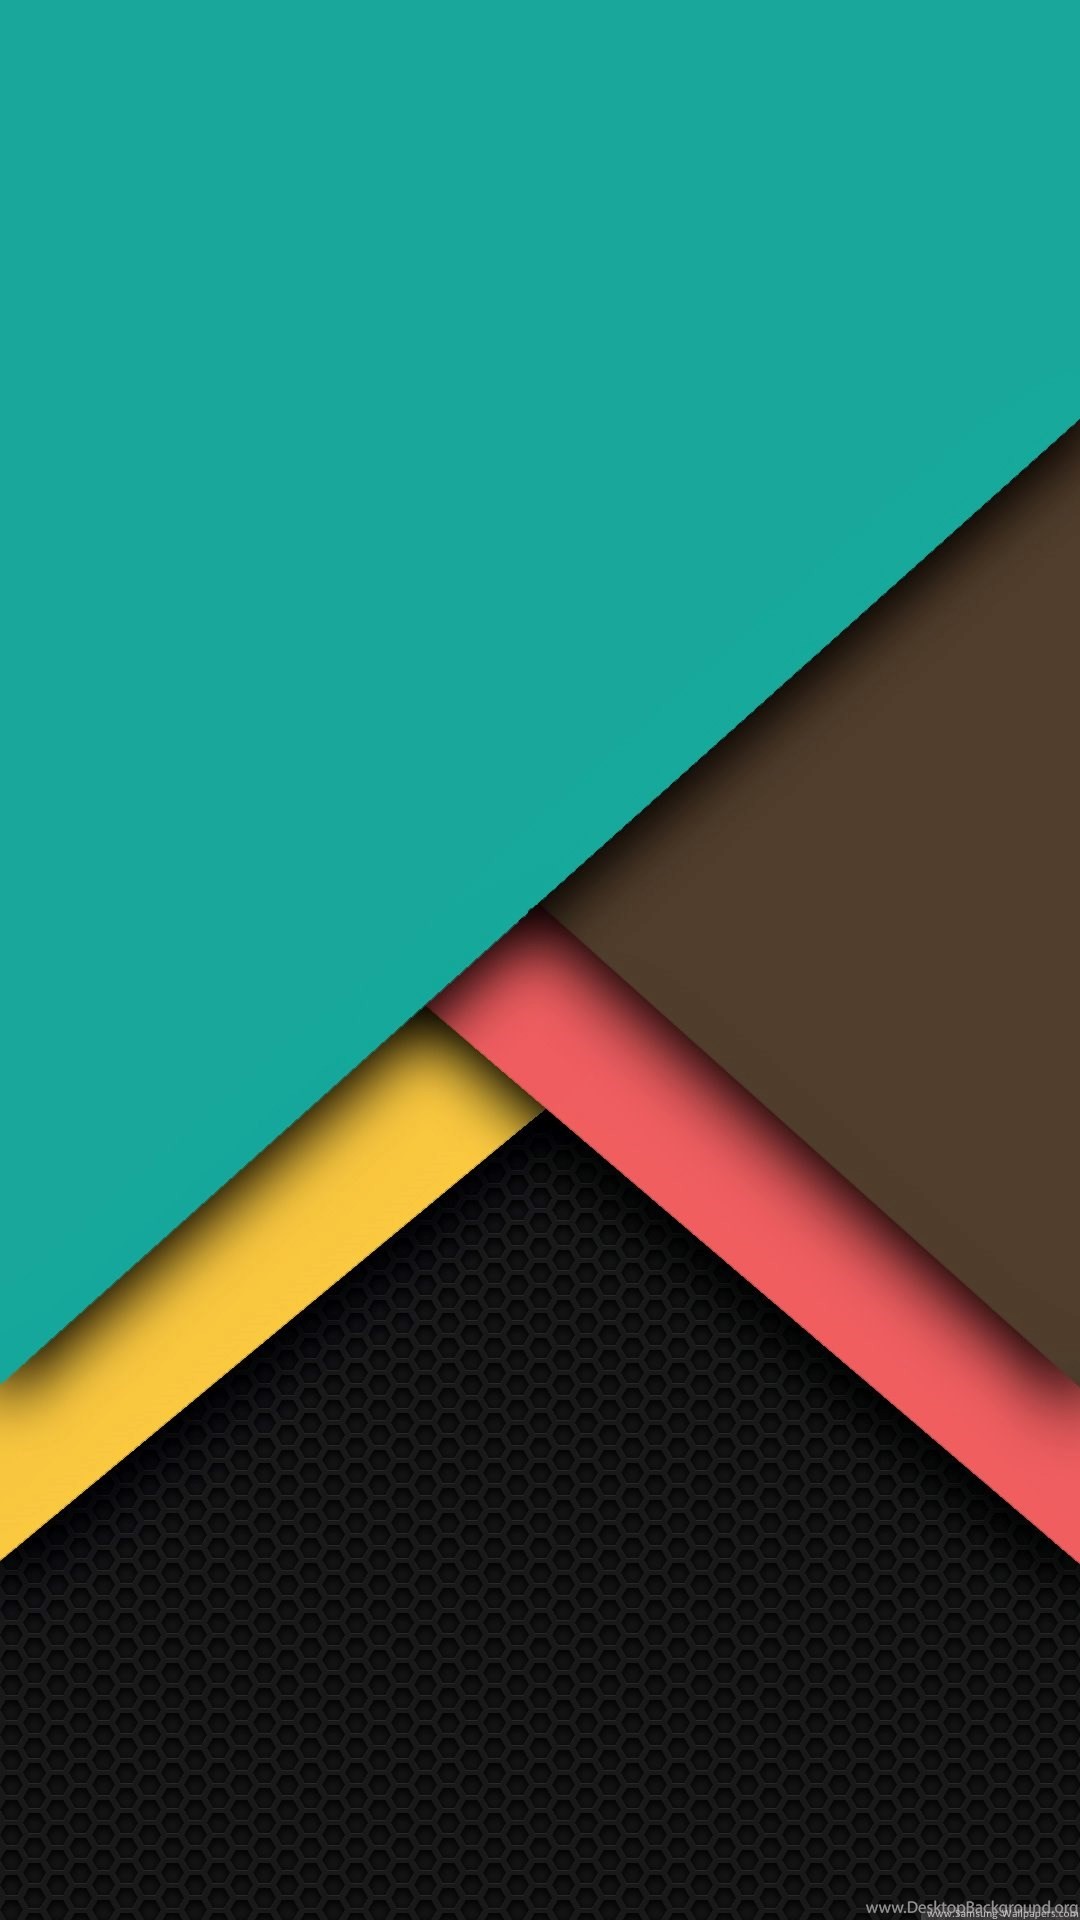 1080x1920 Nexus 6 Android Material Design Wallpapers Desktop Background